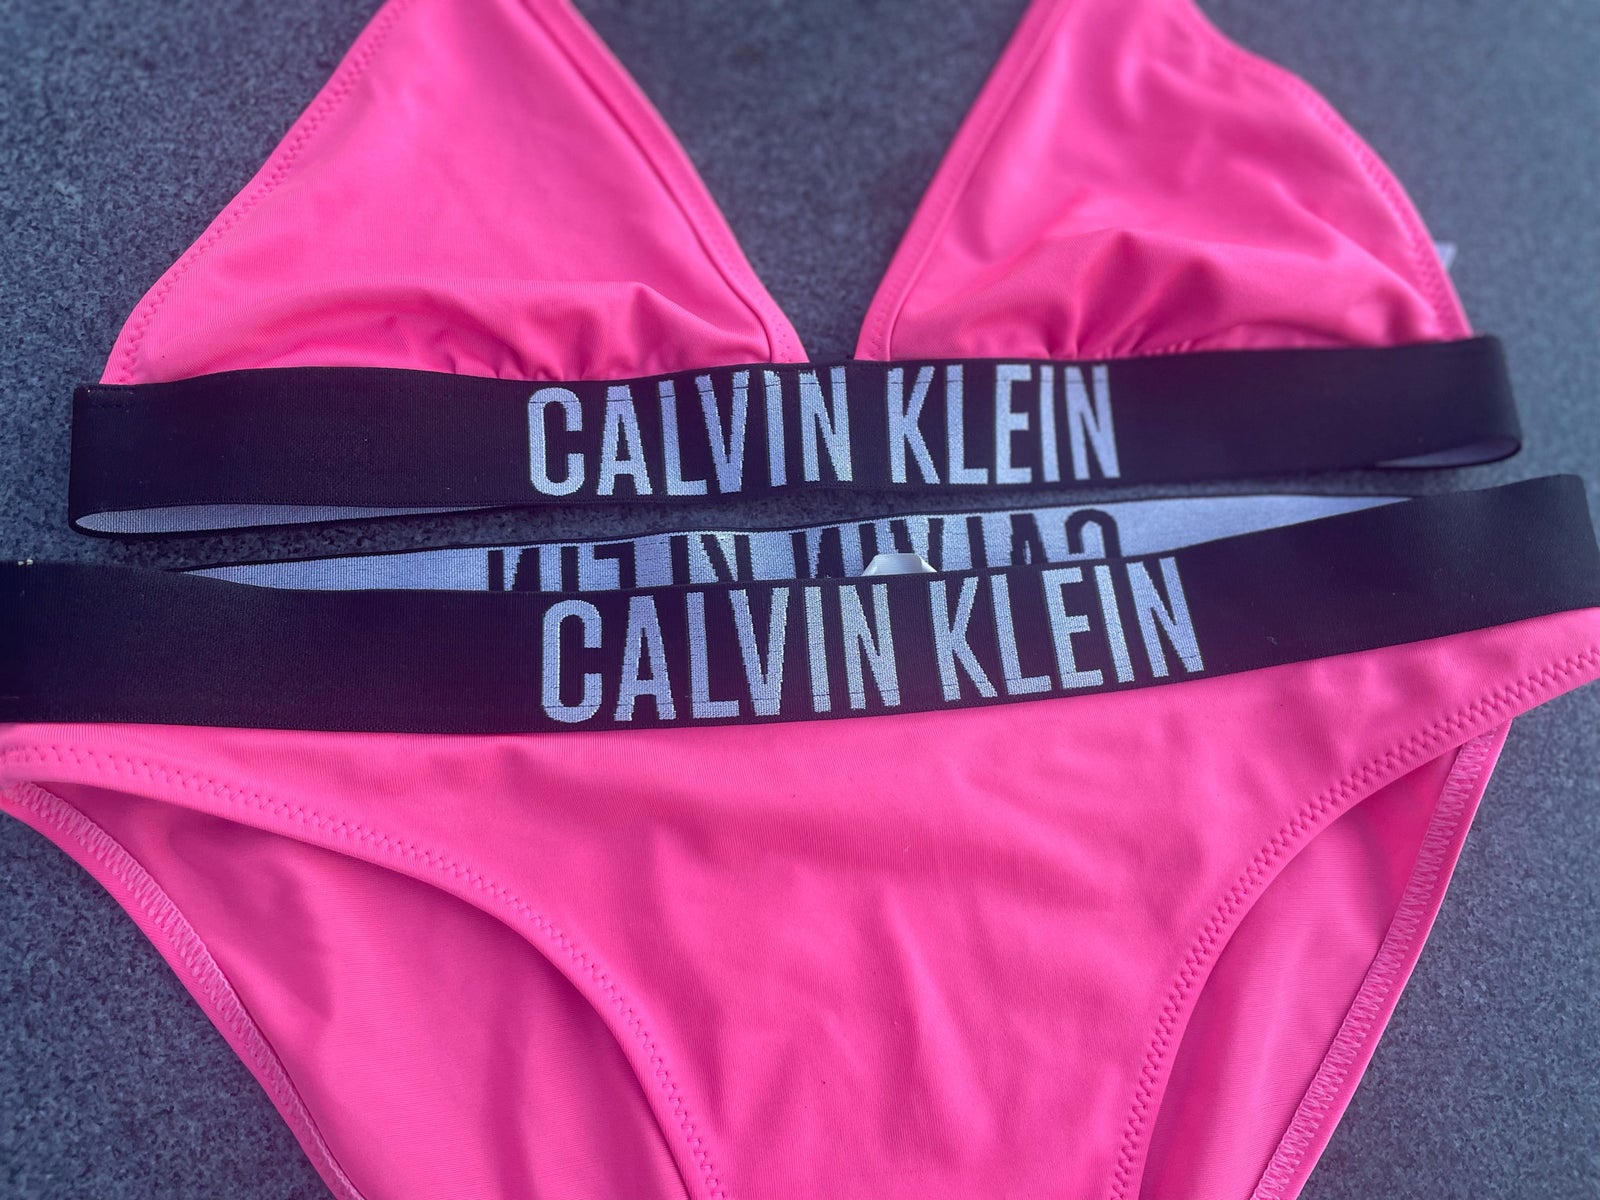 Blandet tøj, Bikini, Calvin Klein